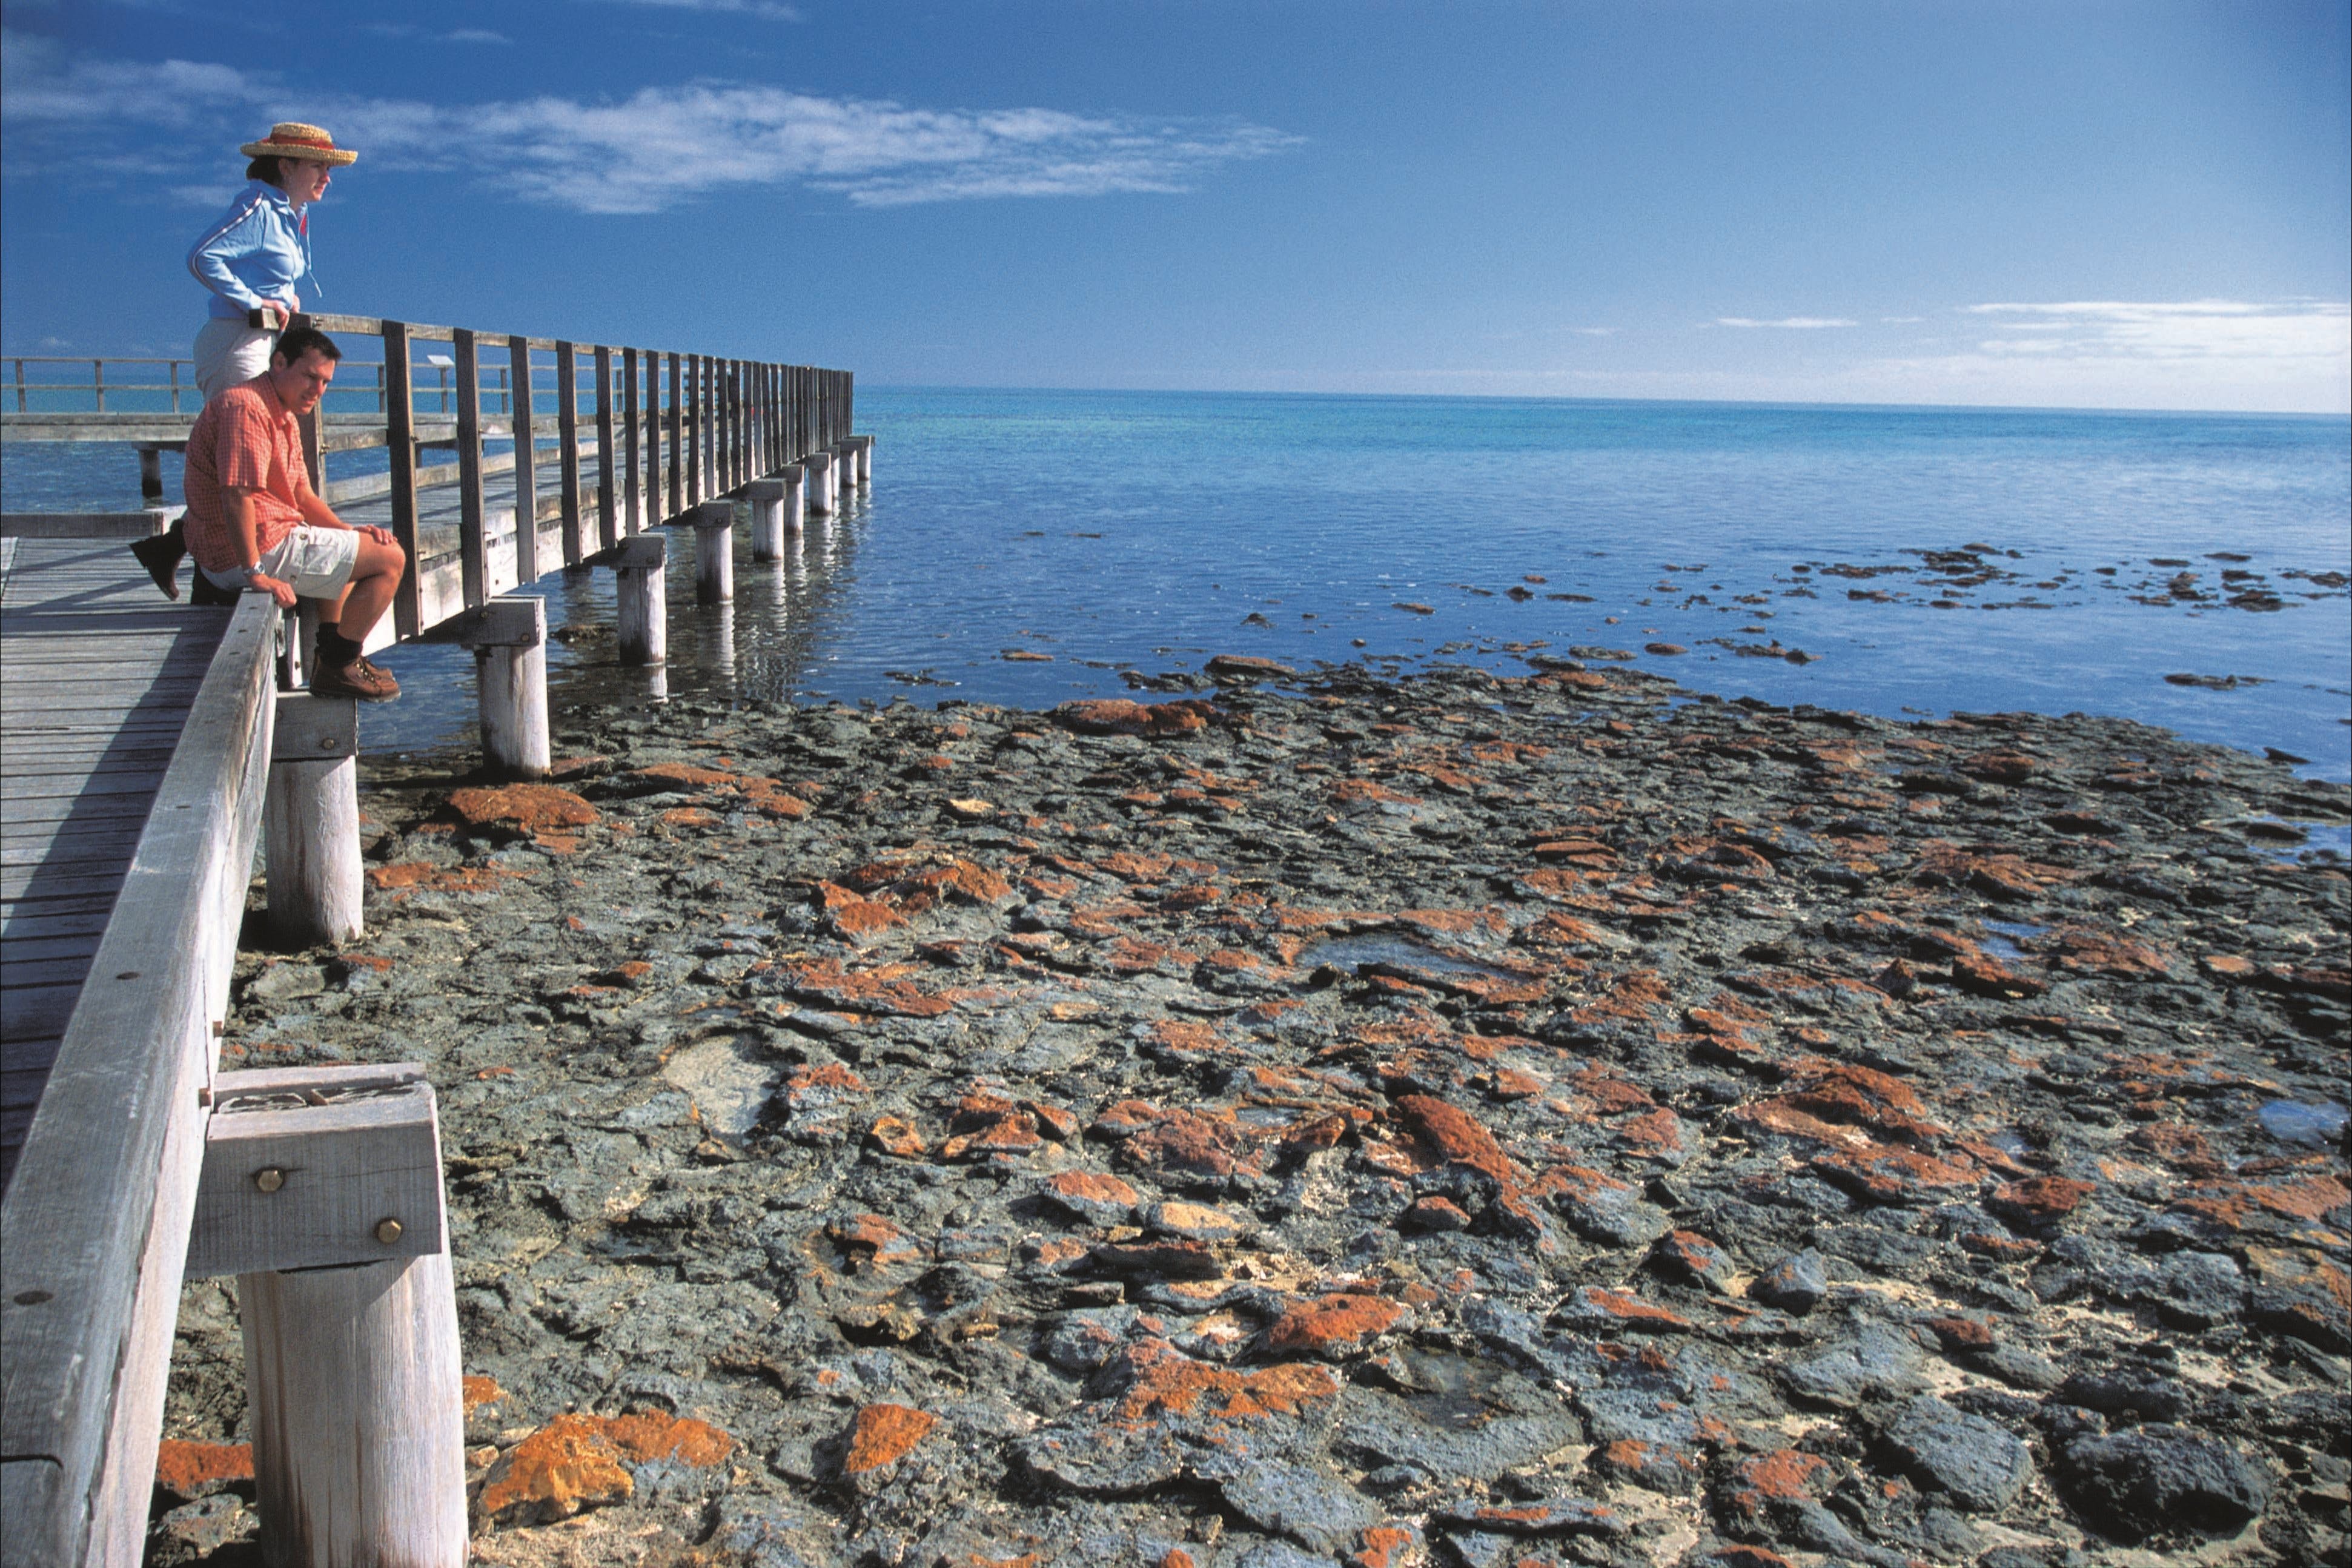 Hamelin Pool Stromatolites - Attractions Melbourne